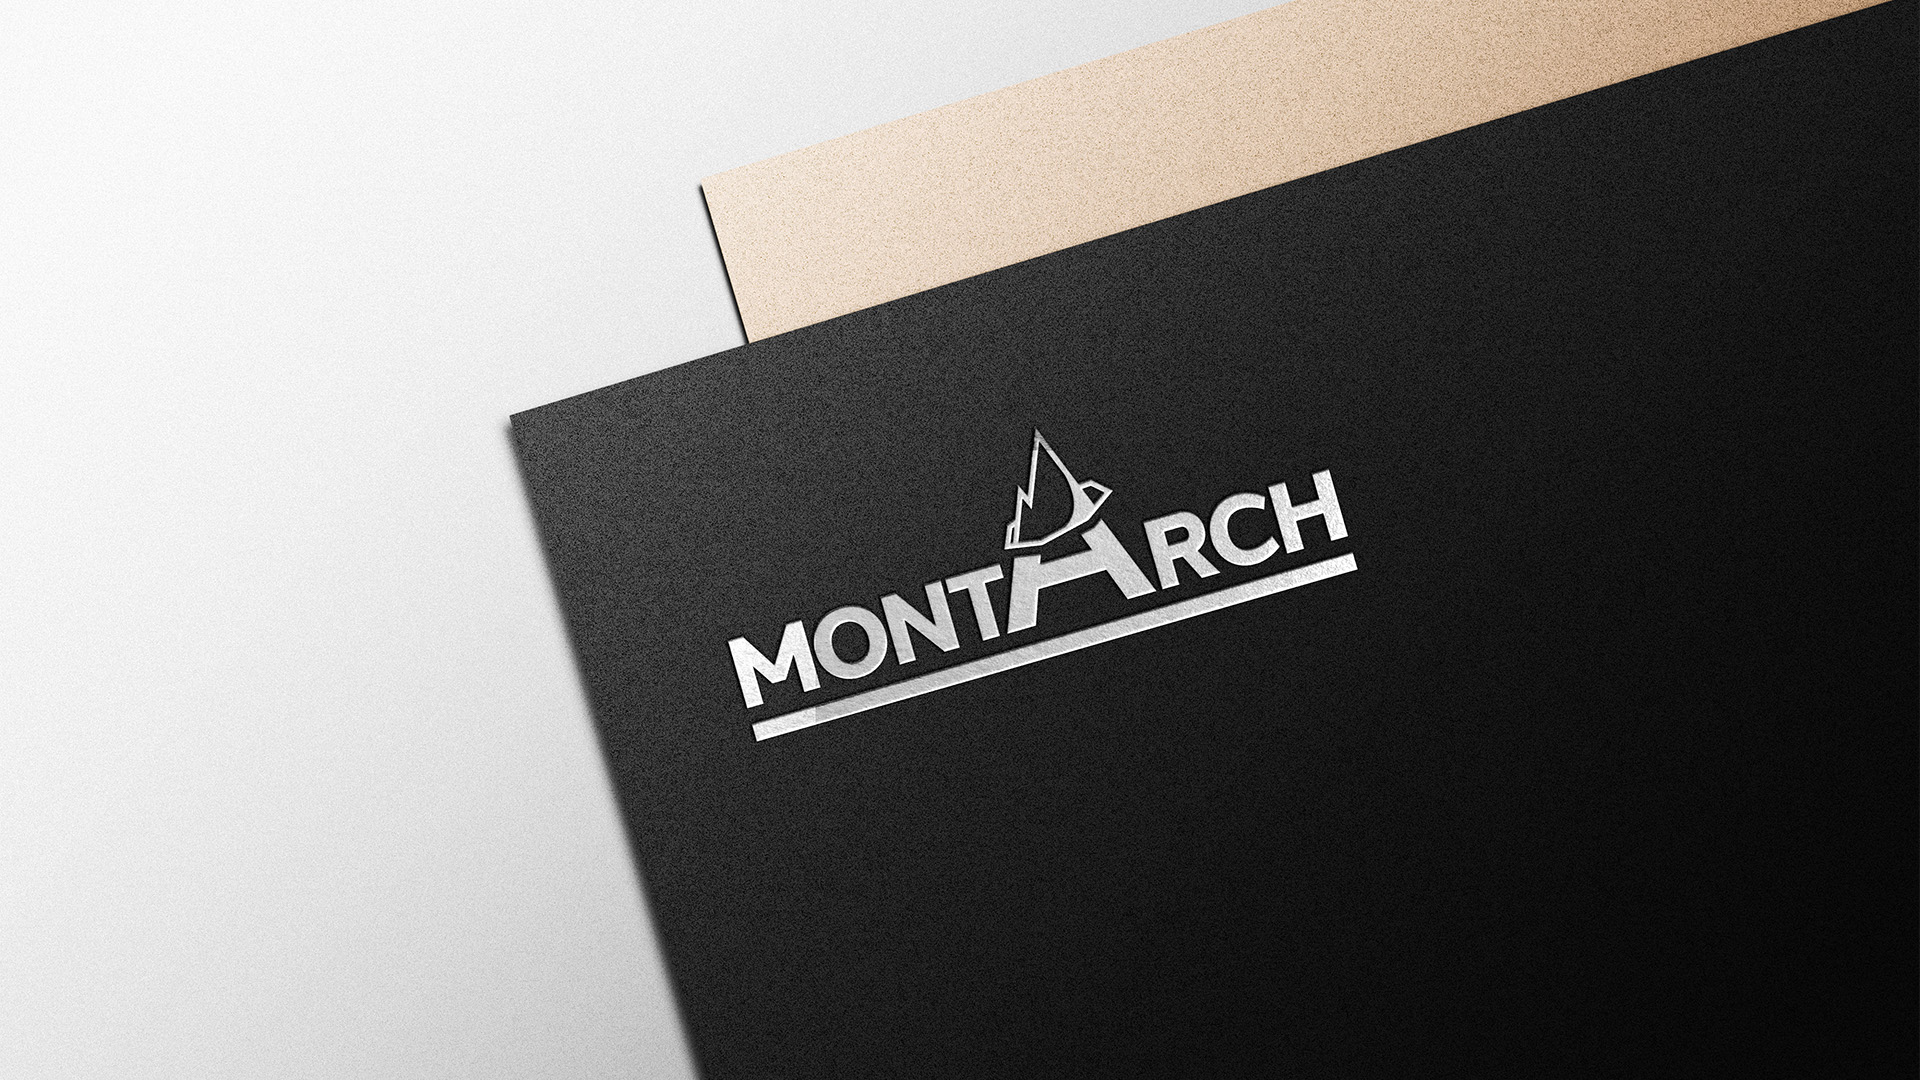 Montarch